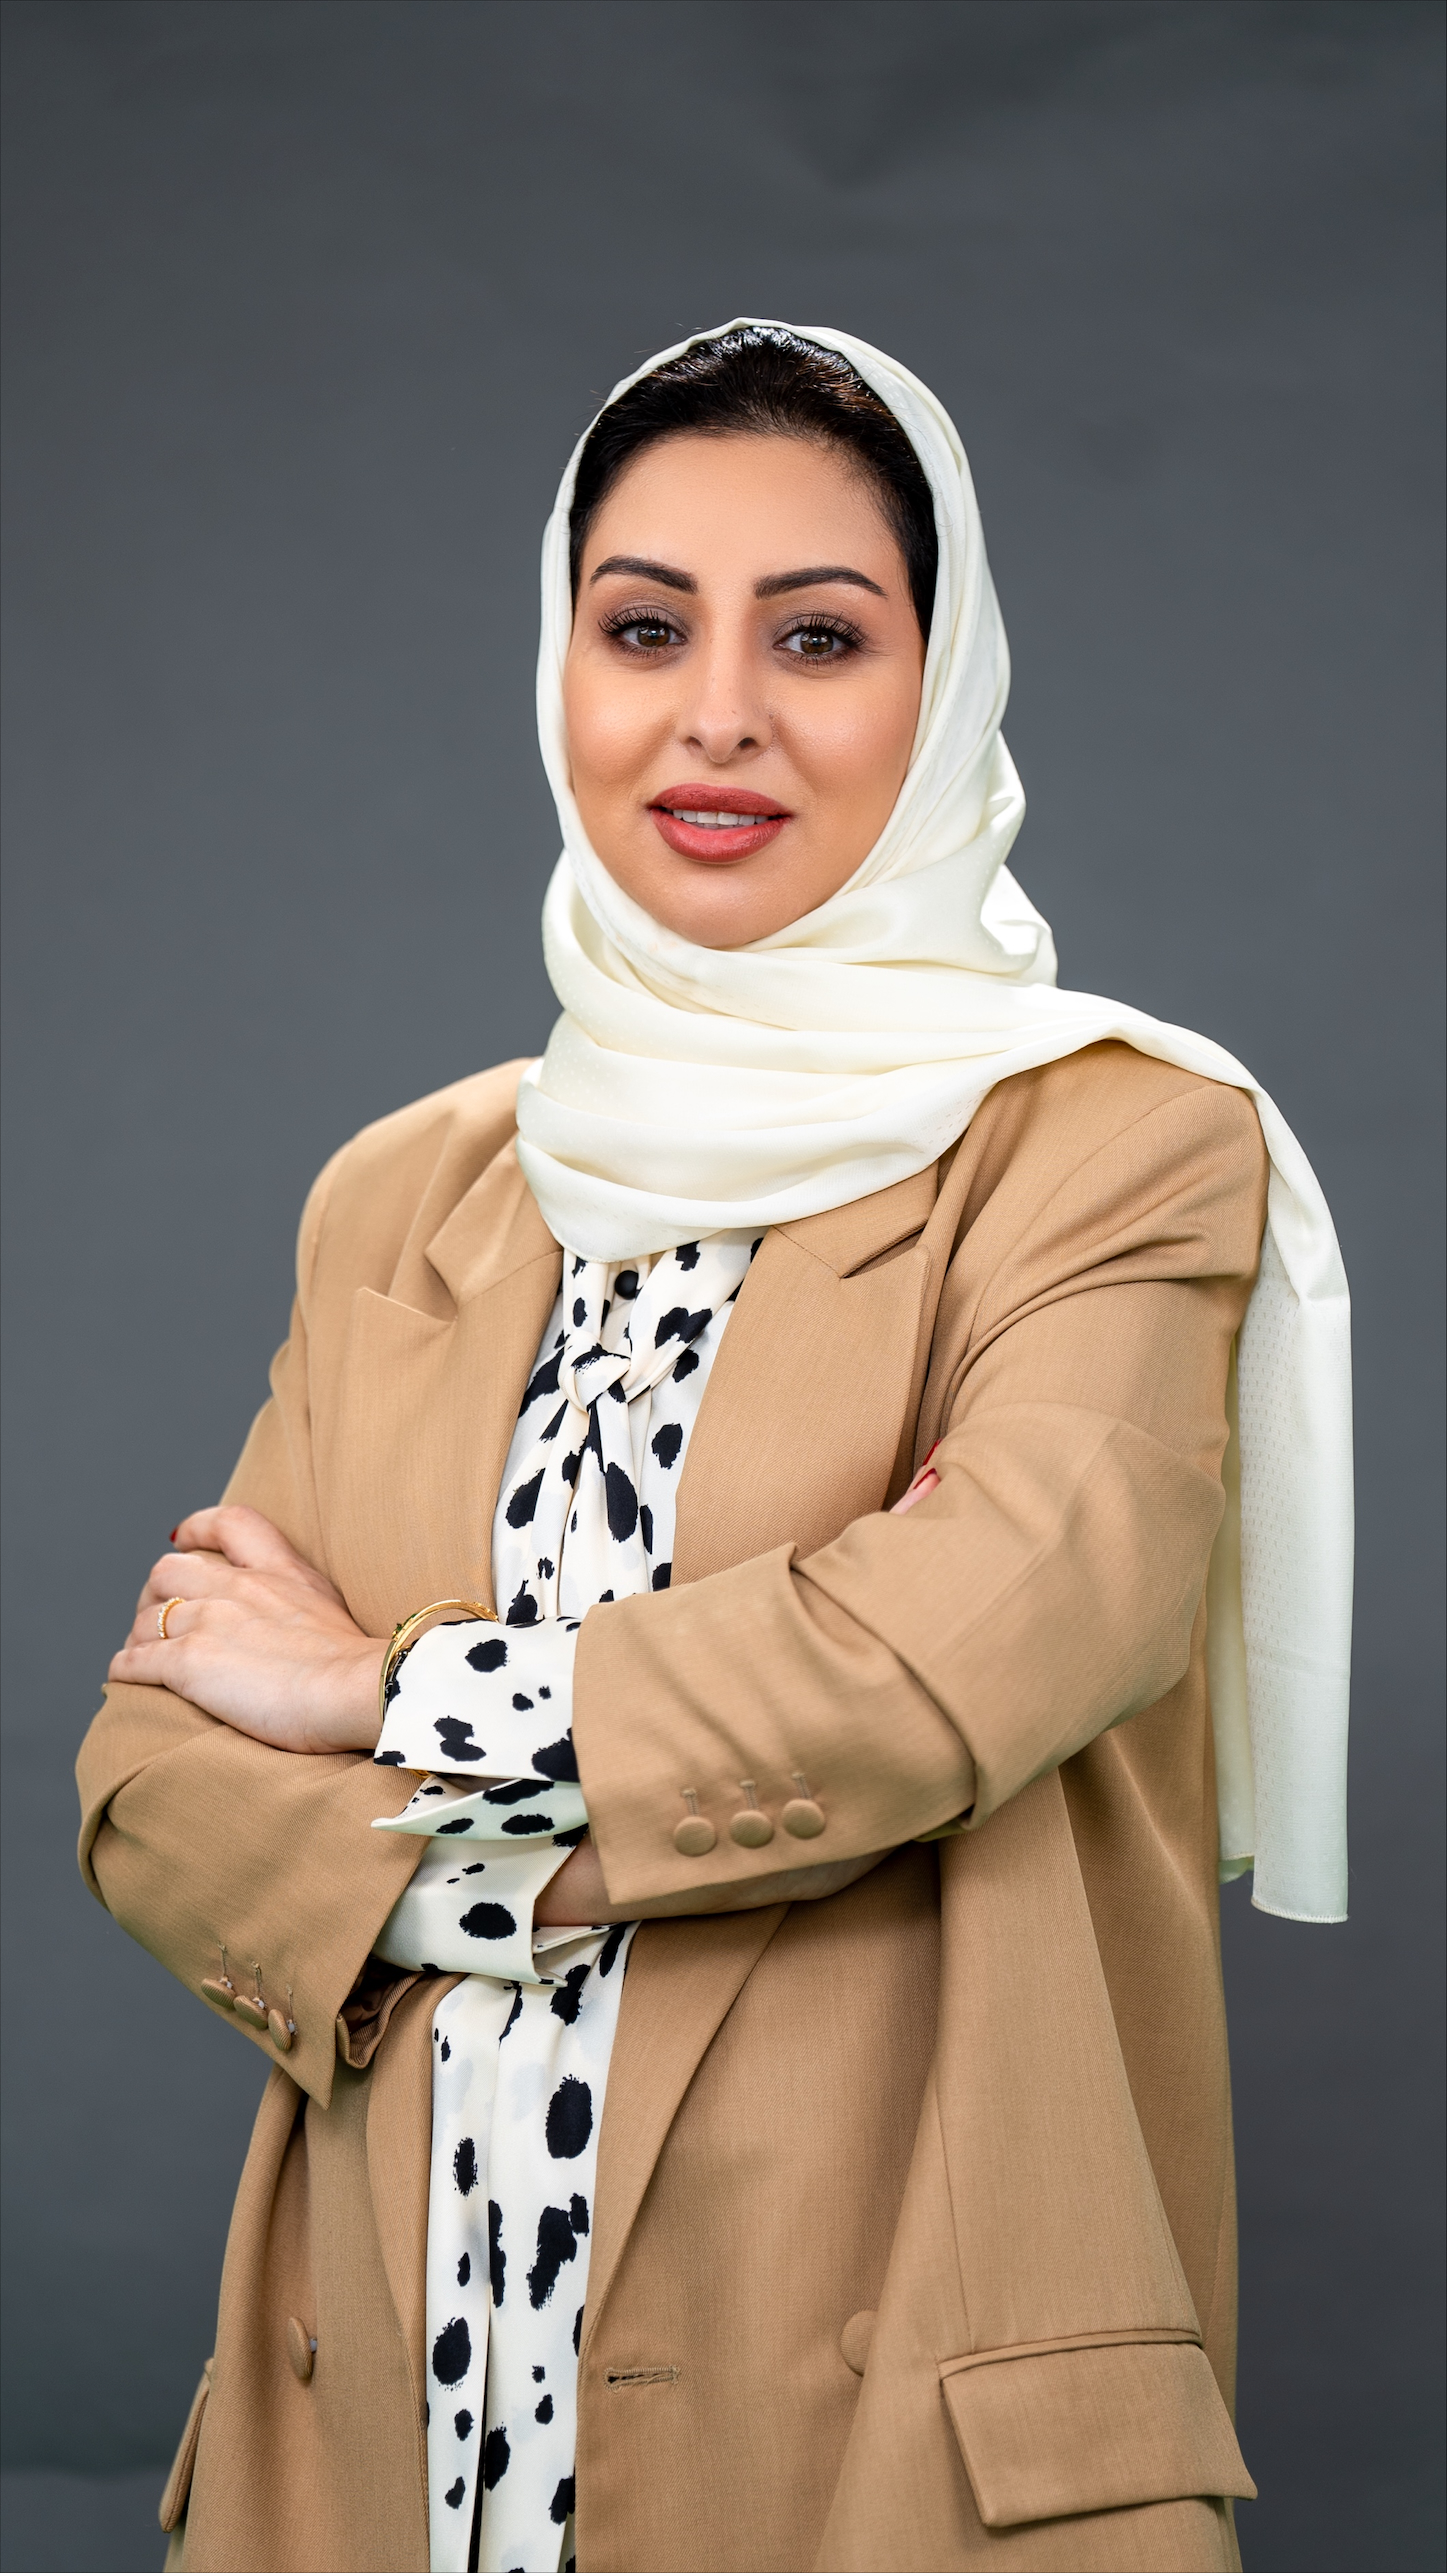 Ms. Lujaina Al Kharusi